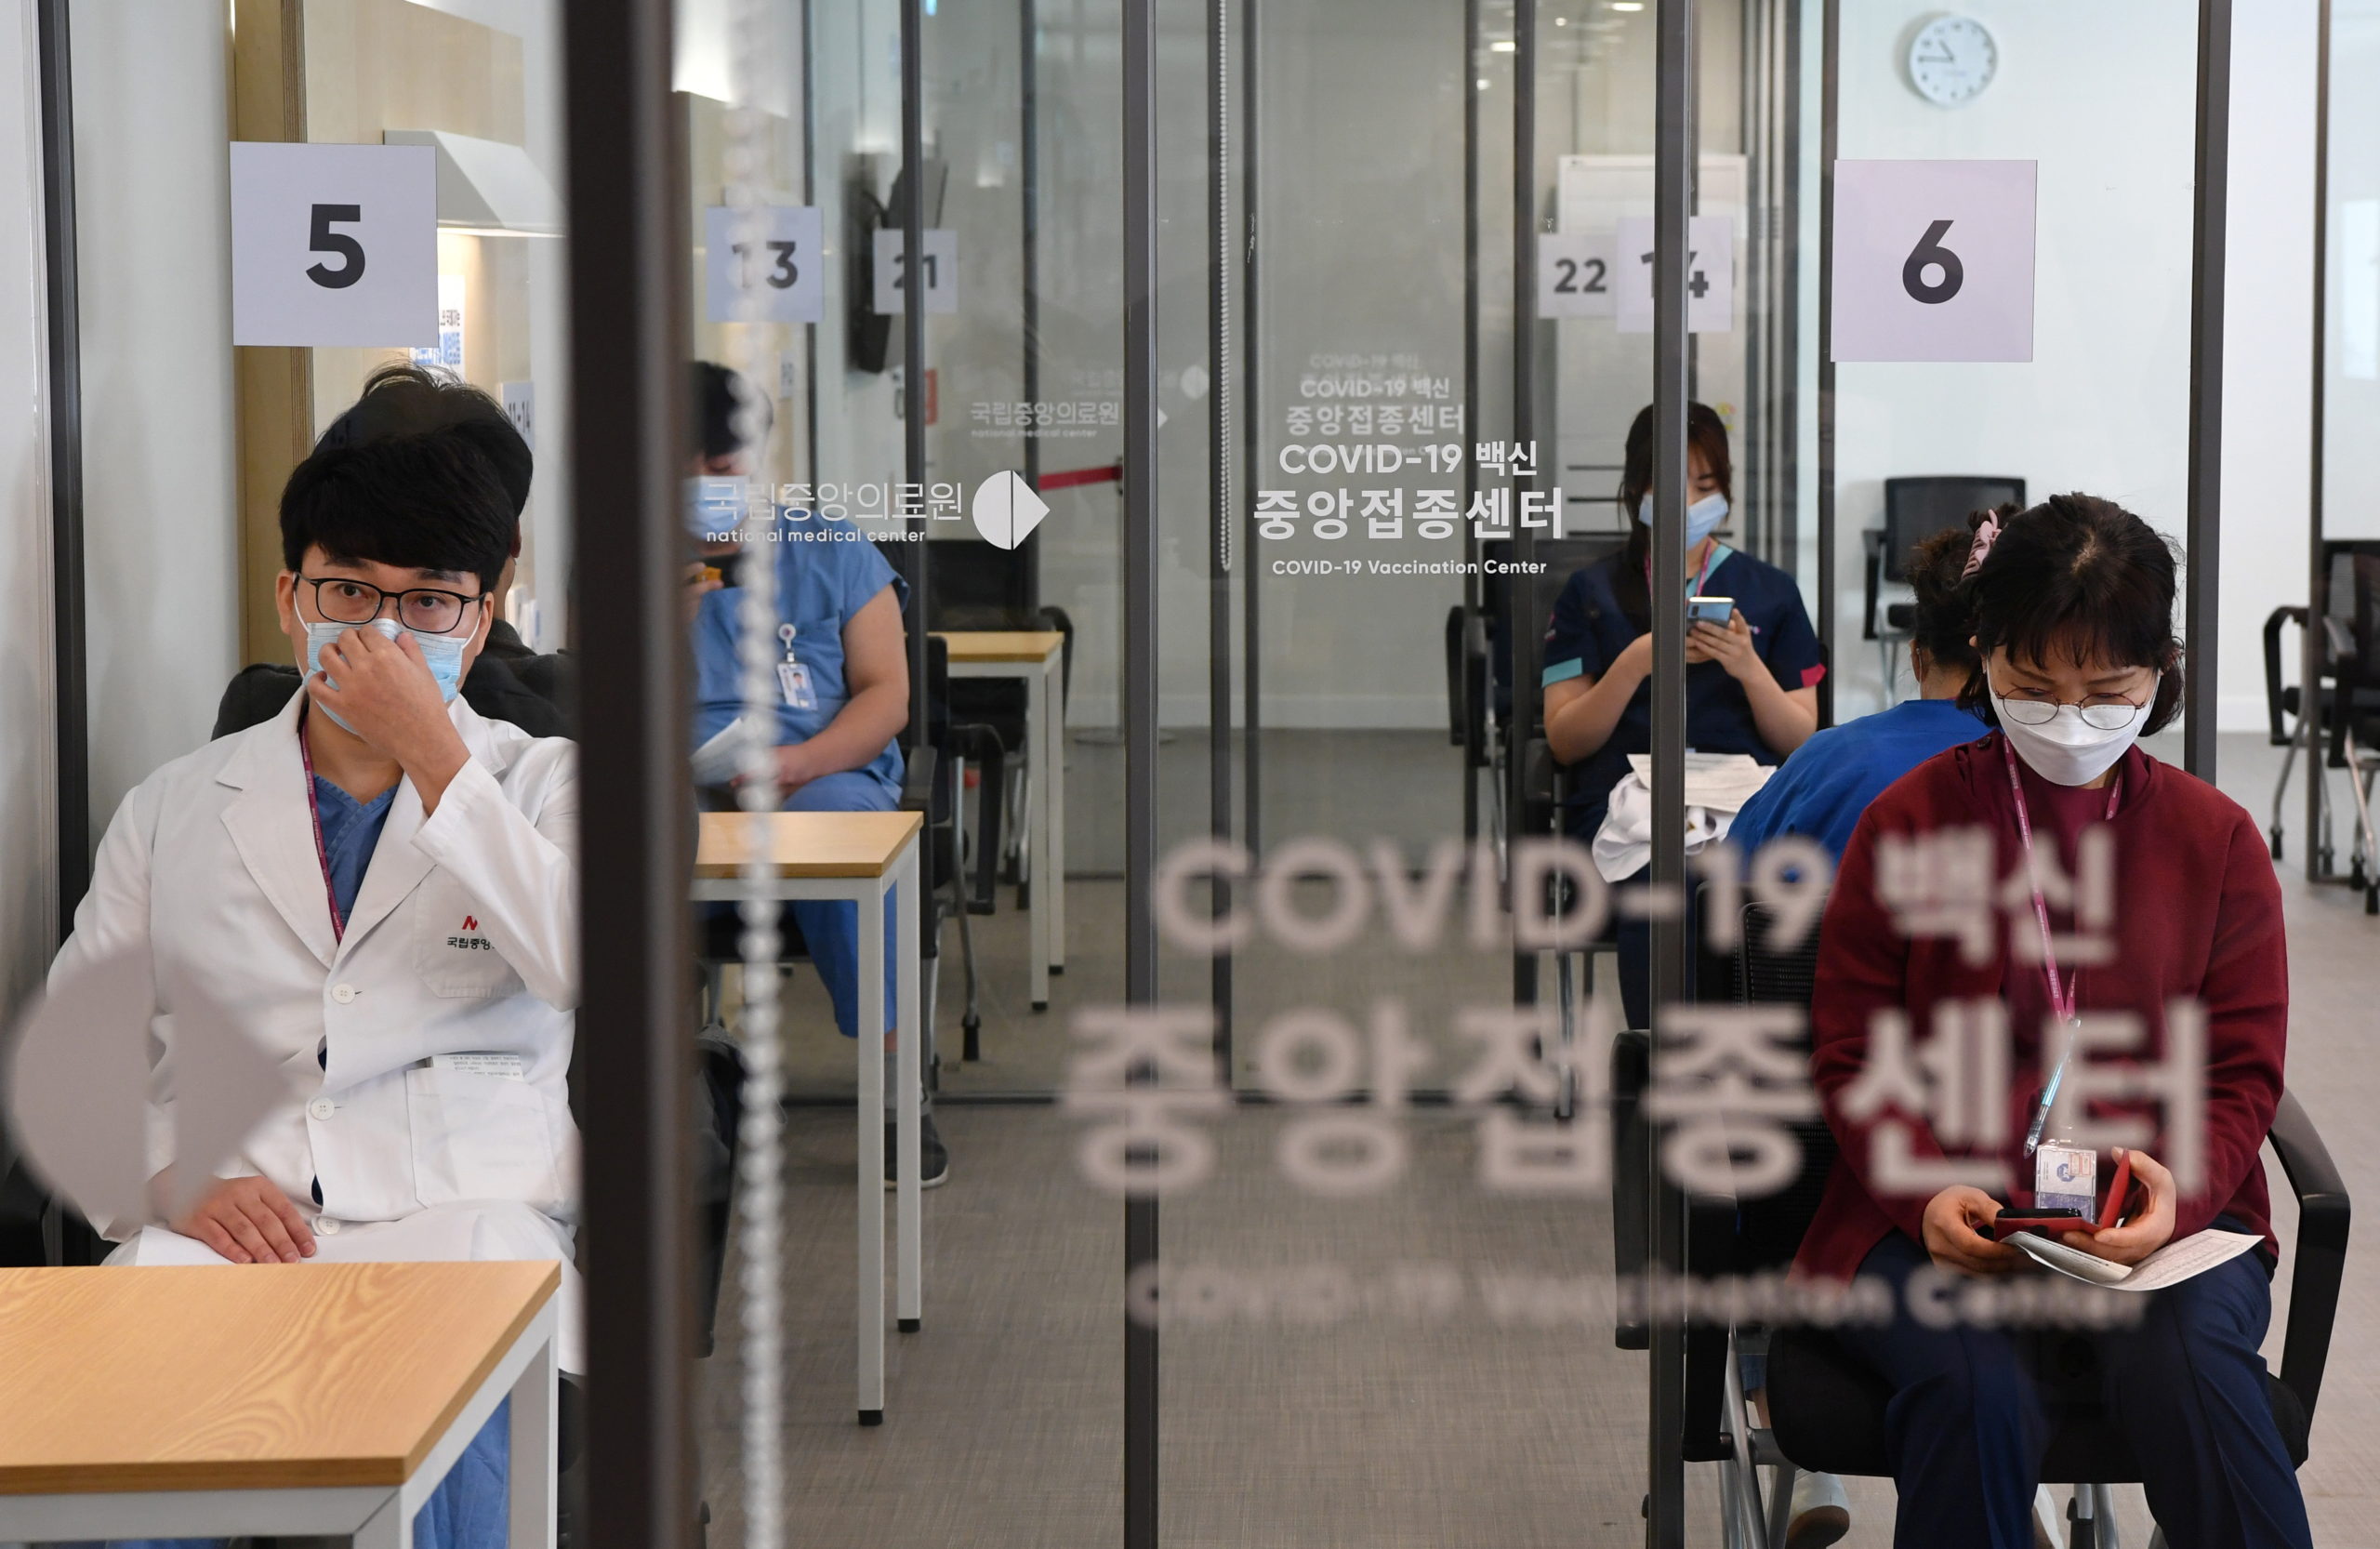 COVID-19 vaccination in South Korea